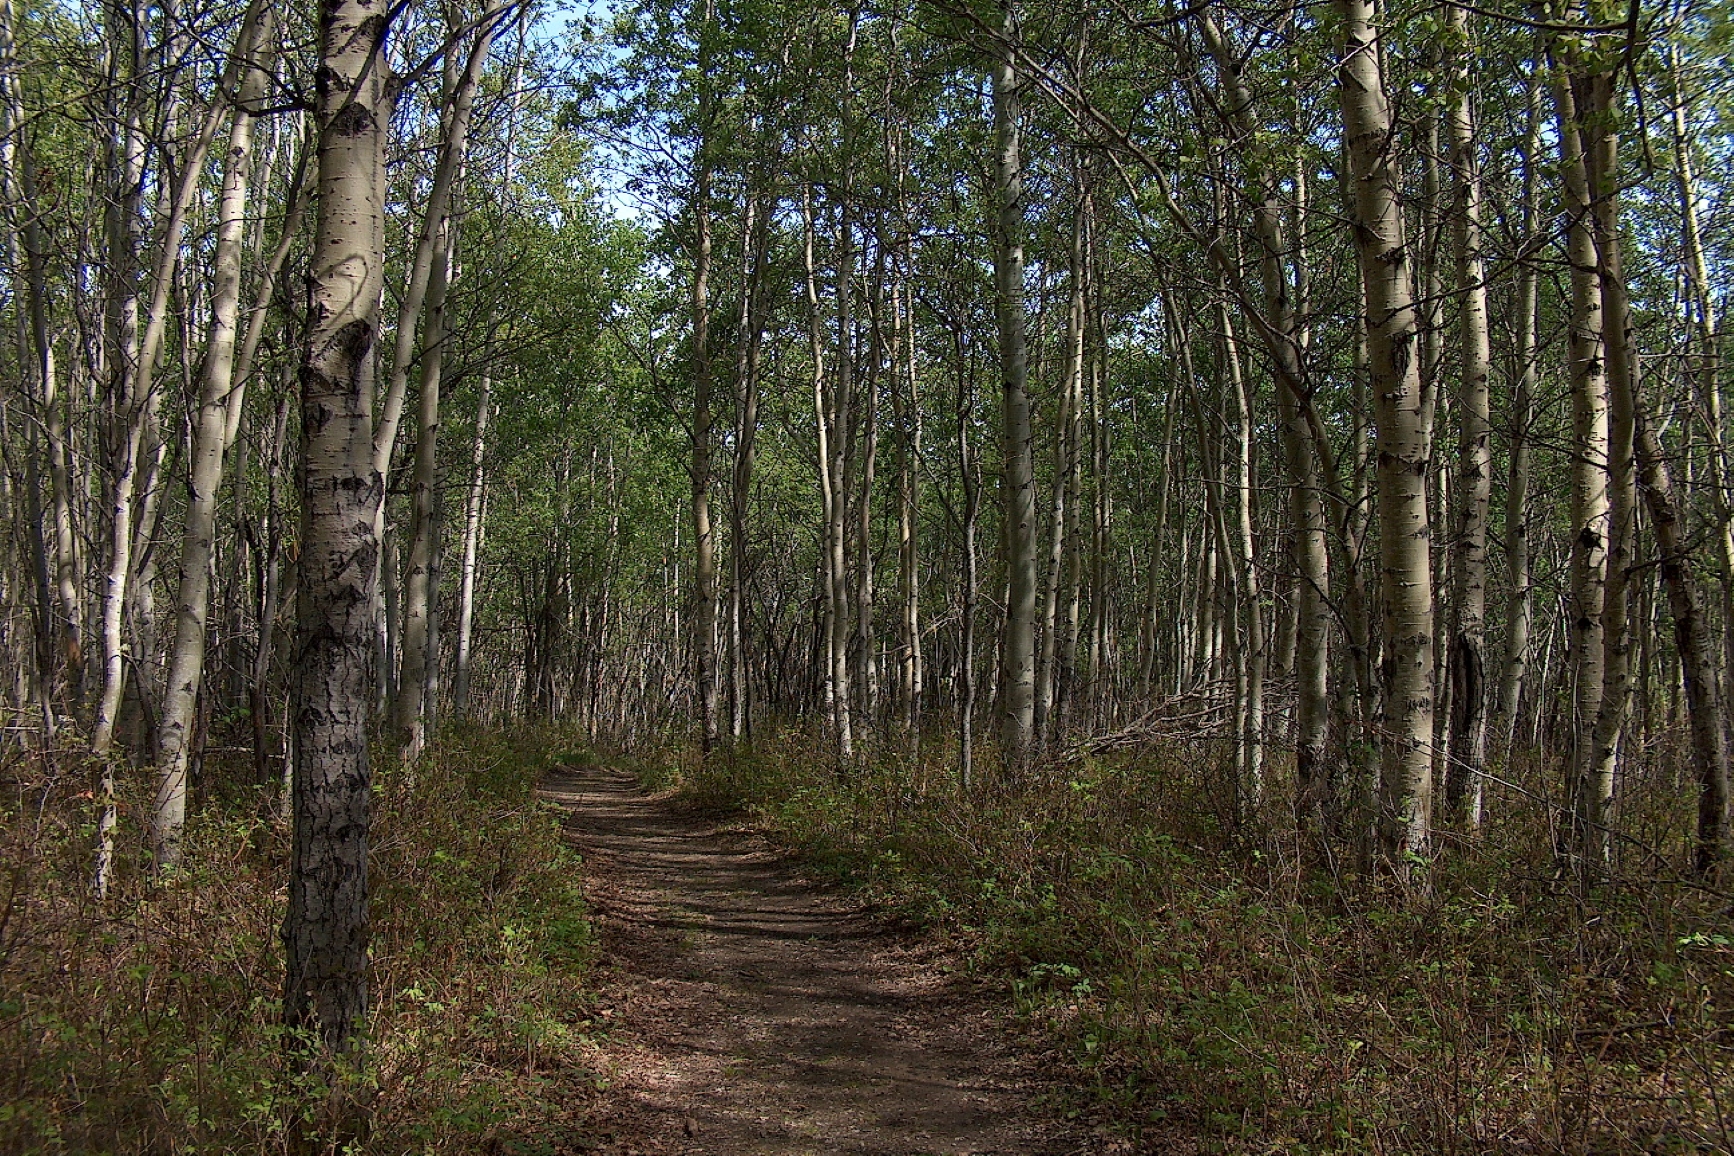 A walking trail path through the forest.